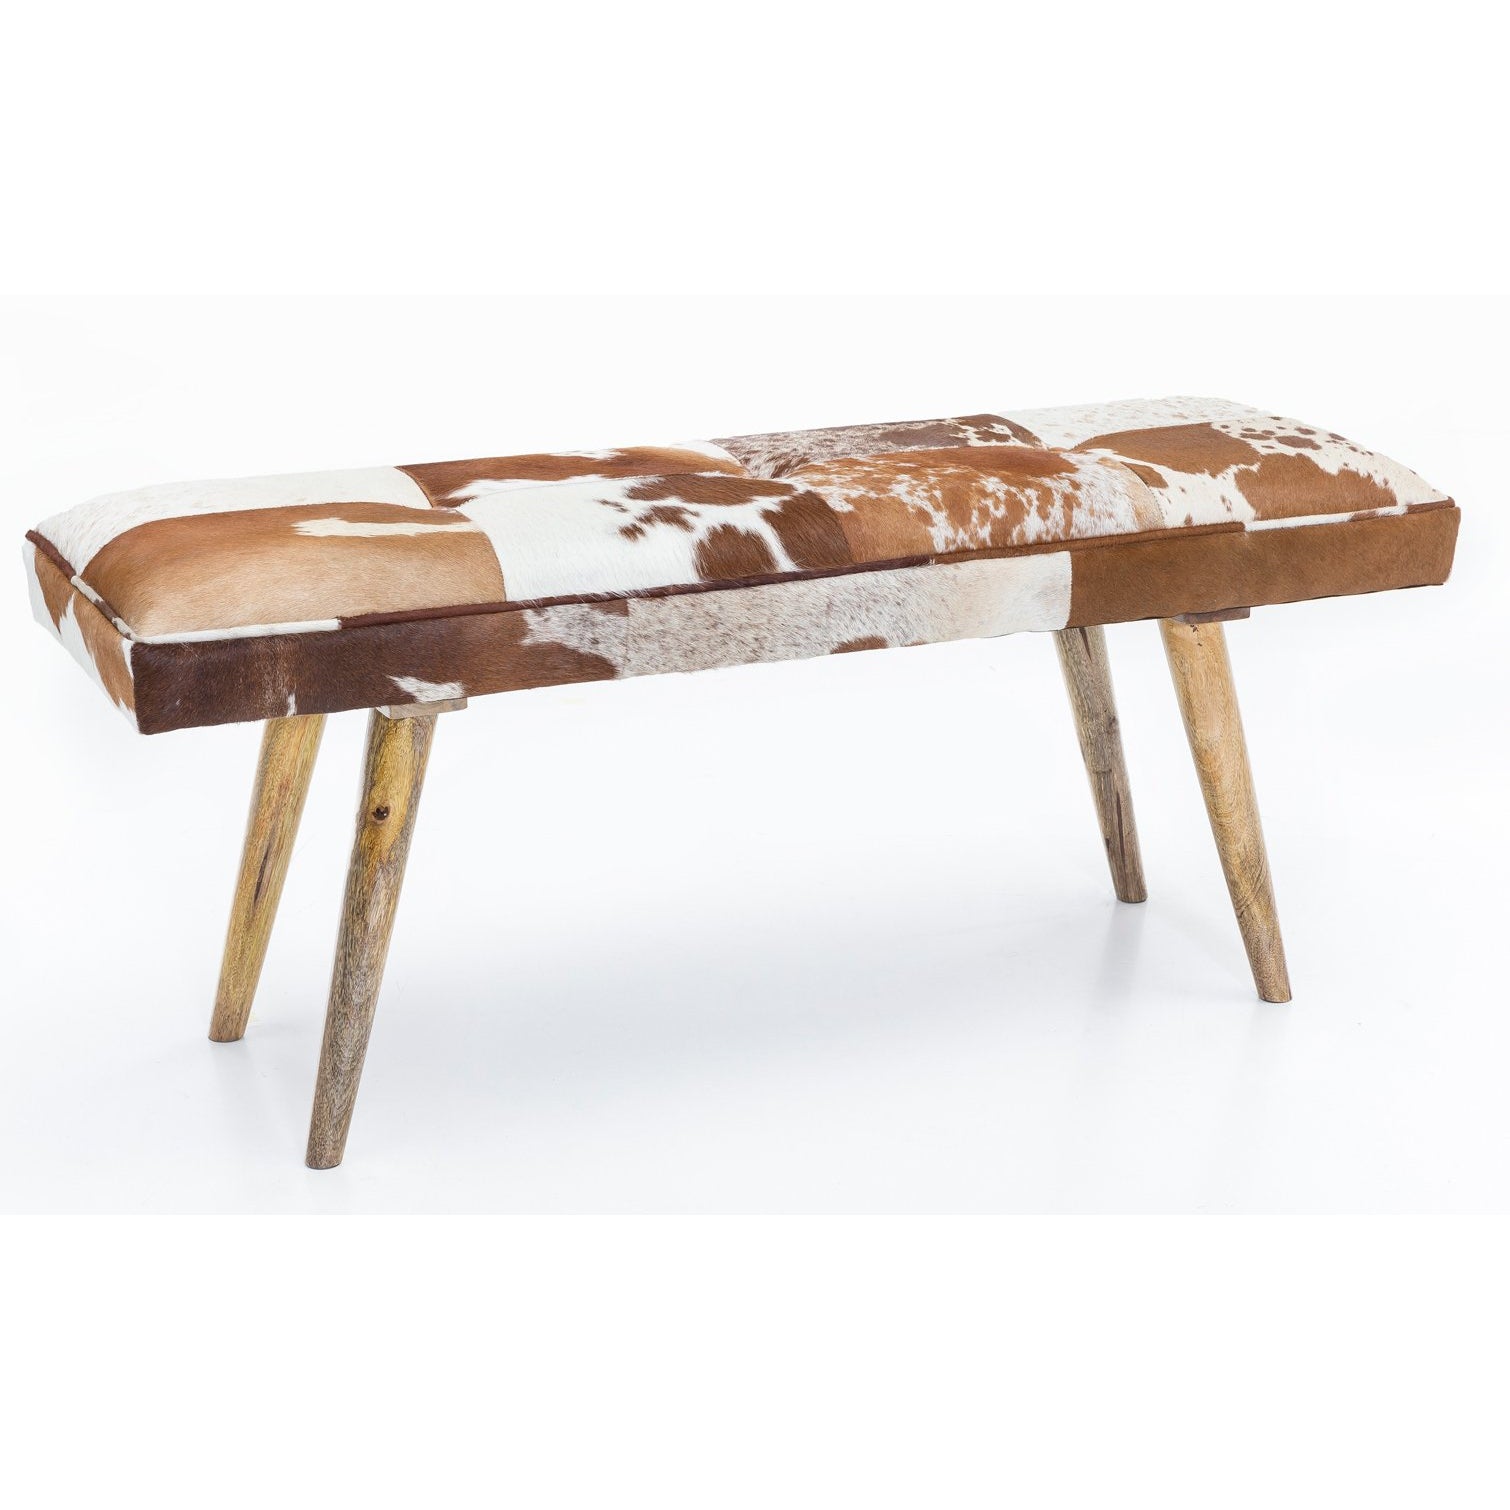 Nancy's Escanaba Sofa - Upholstered Sofa - Hall Sofa - Bench - Goatskin - Mango Wood - Brown/White - 120 cm